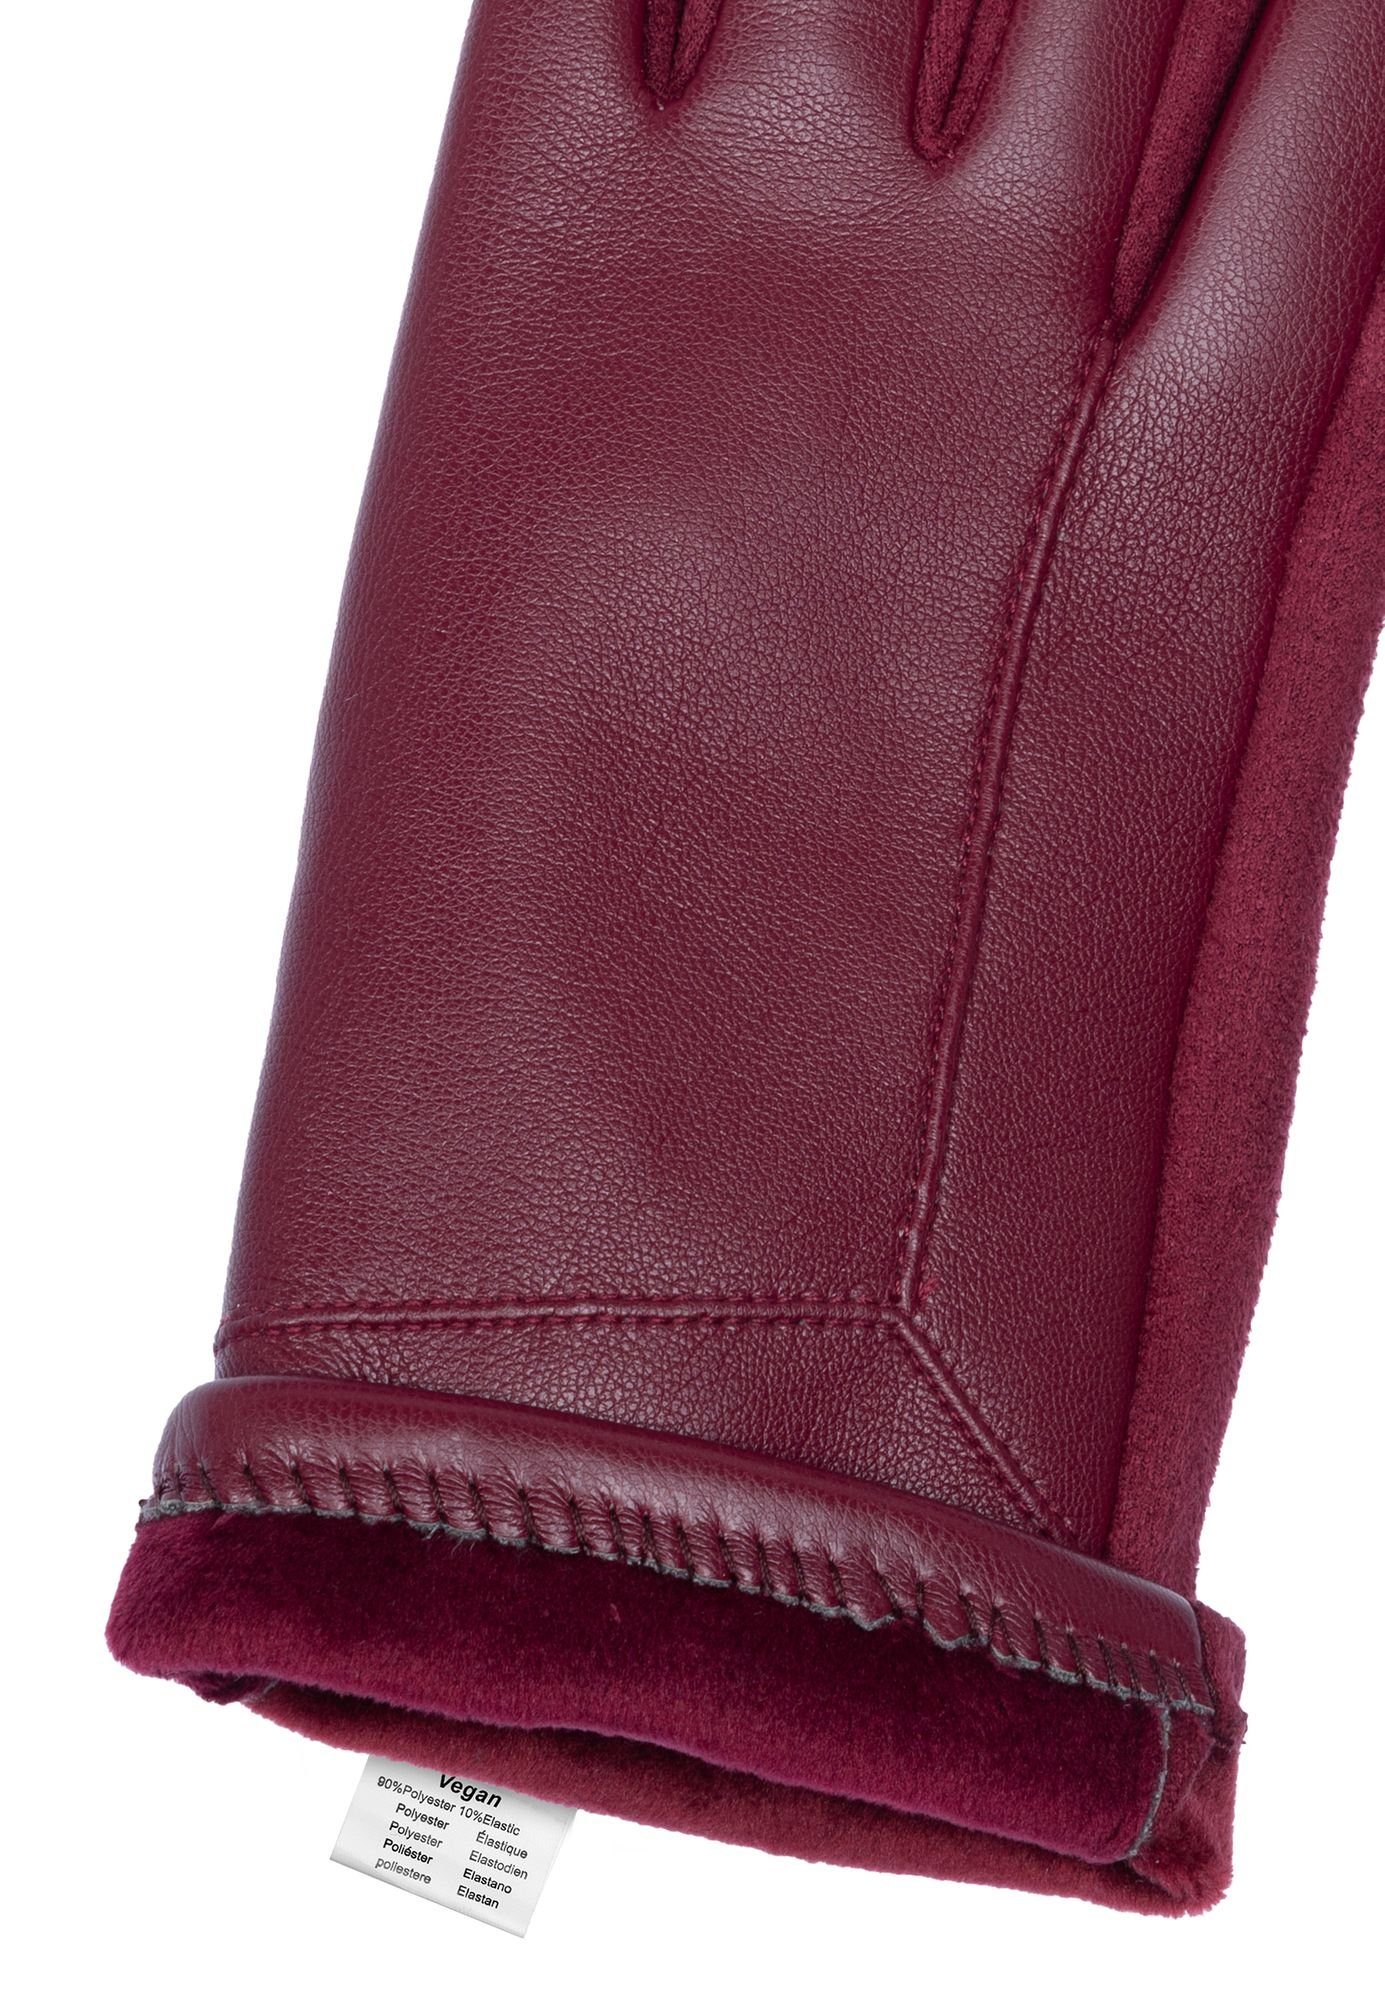 Damen Strickhandschuhe weinrot Caspar uni GLV015 elegante Handschuhe klassisch